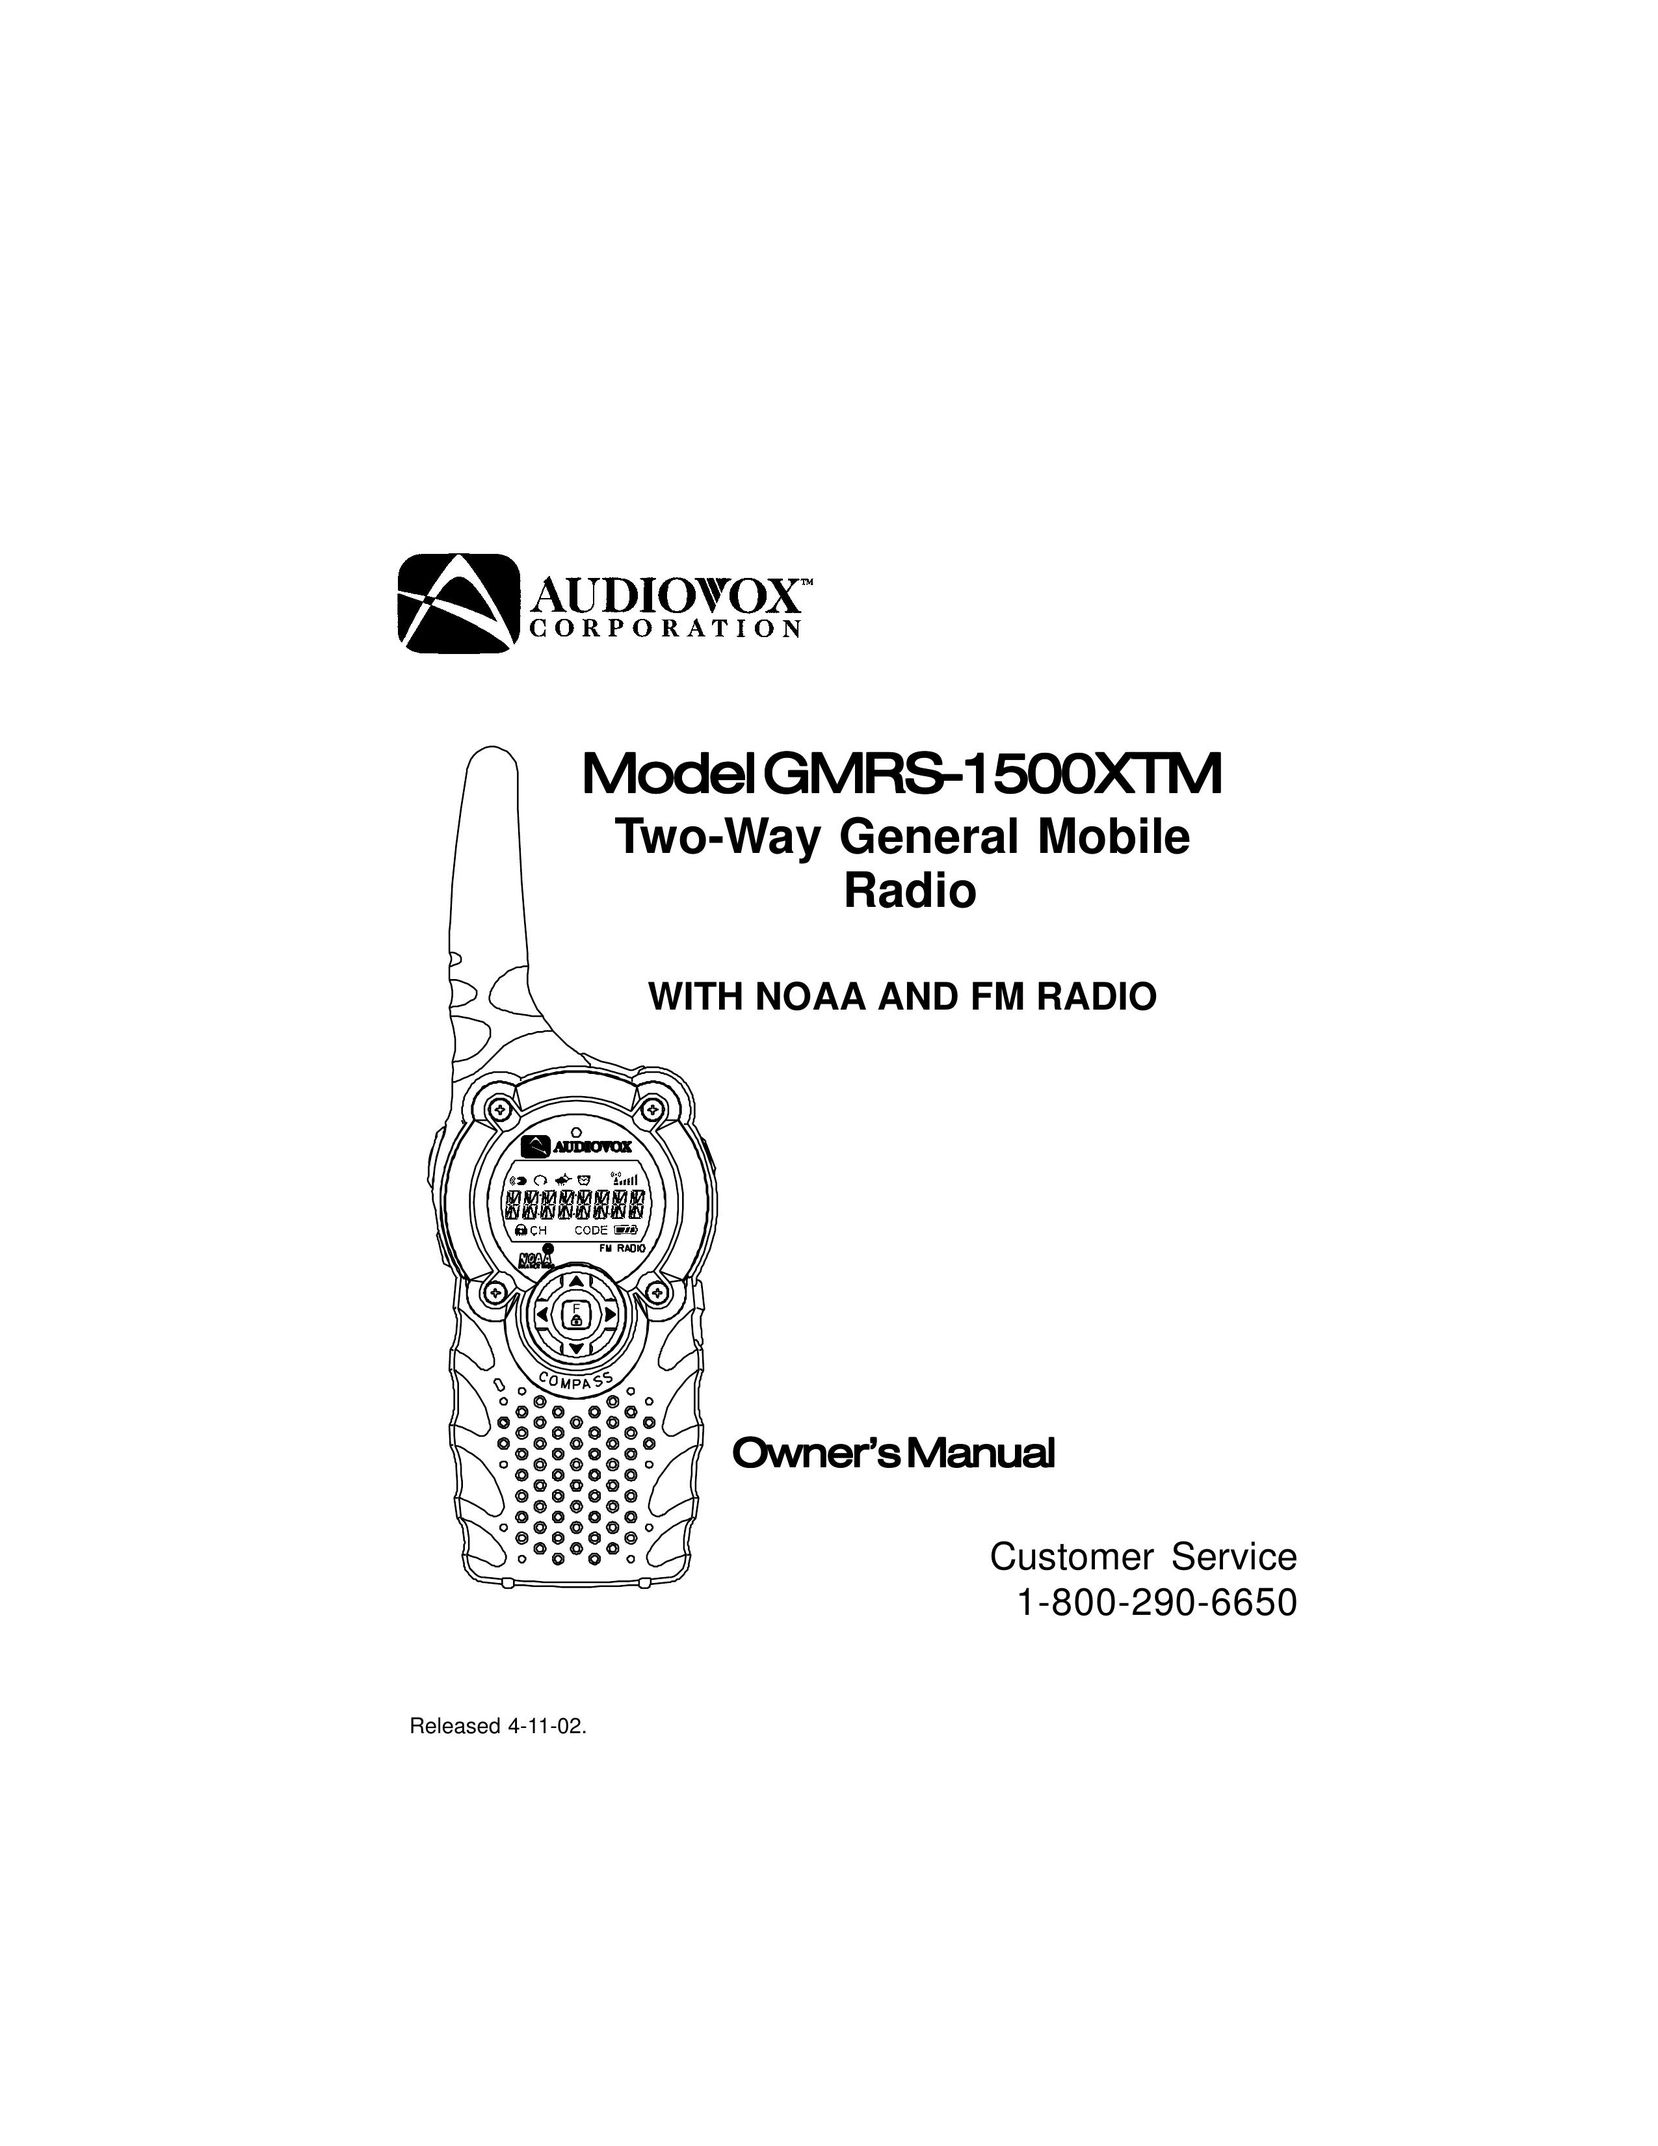 Audiovox GMRS-1500 Two-Way Radio User Manual